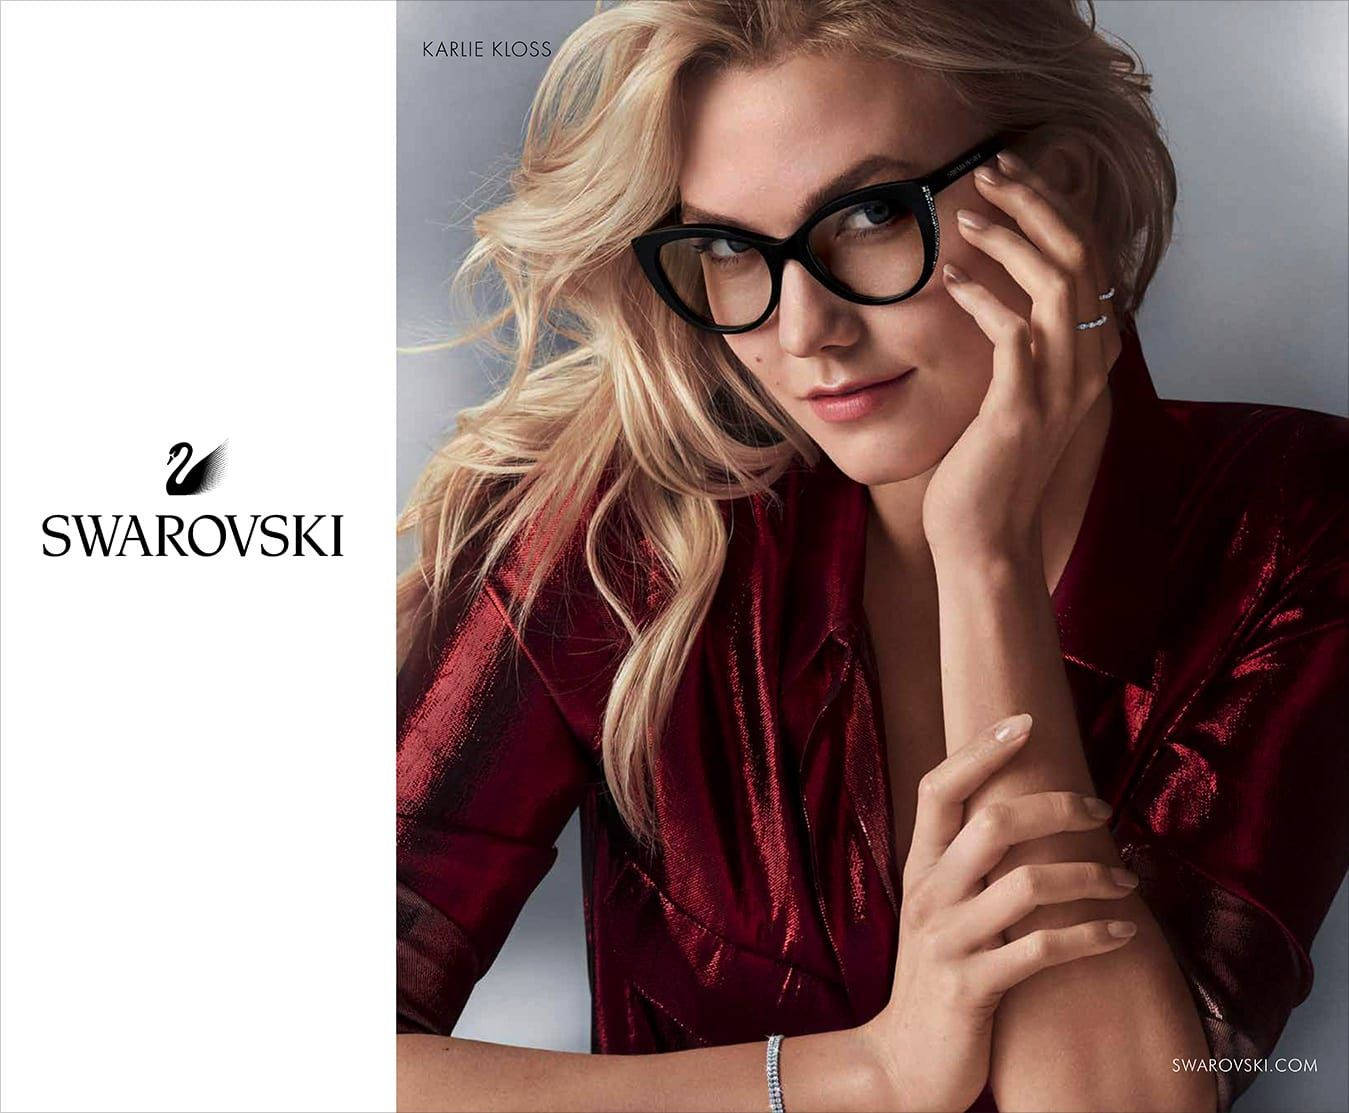 Swarovski Glasses Karlie Kloss Wallpaper